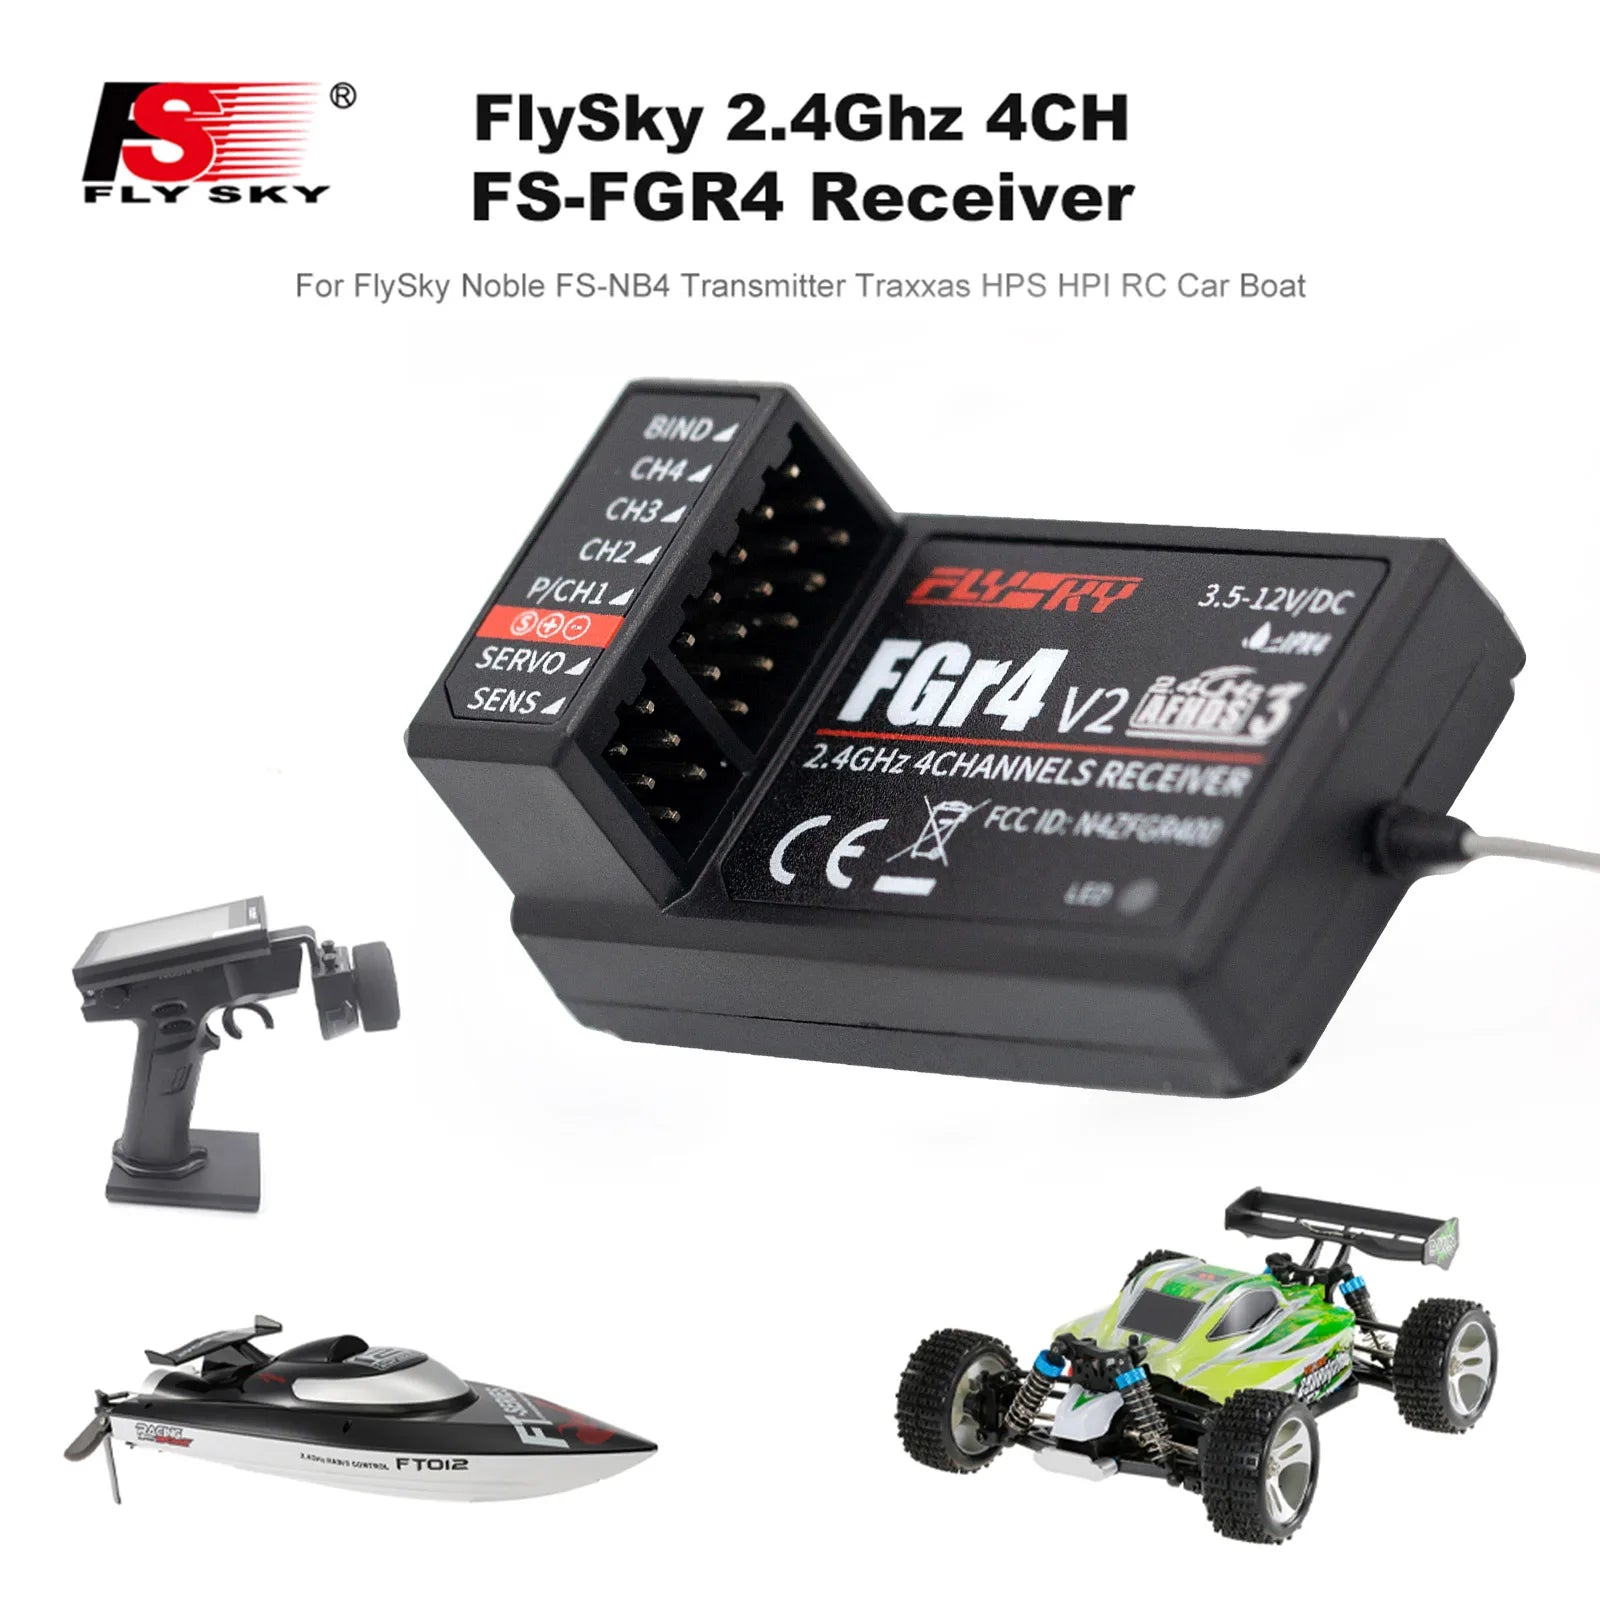 FlySky FS-FGR4 2.4Ghz 4CH Receiver, 5 FlySky 2.4Ghz 4CH Fl Sky FS-FGR4